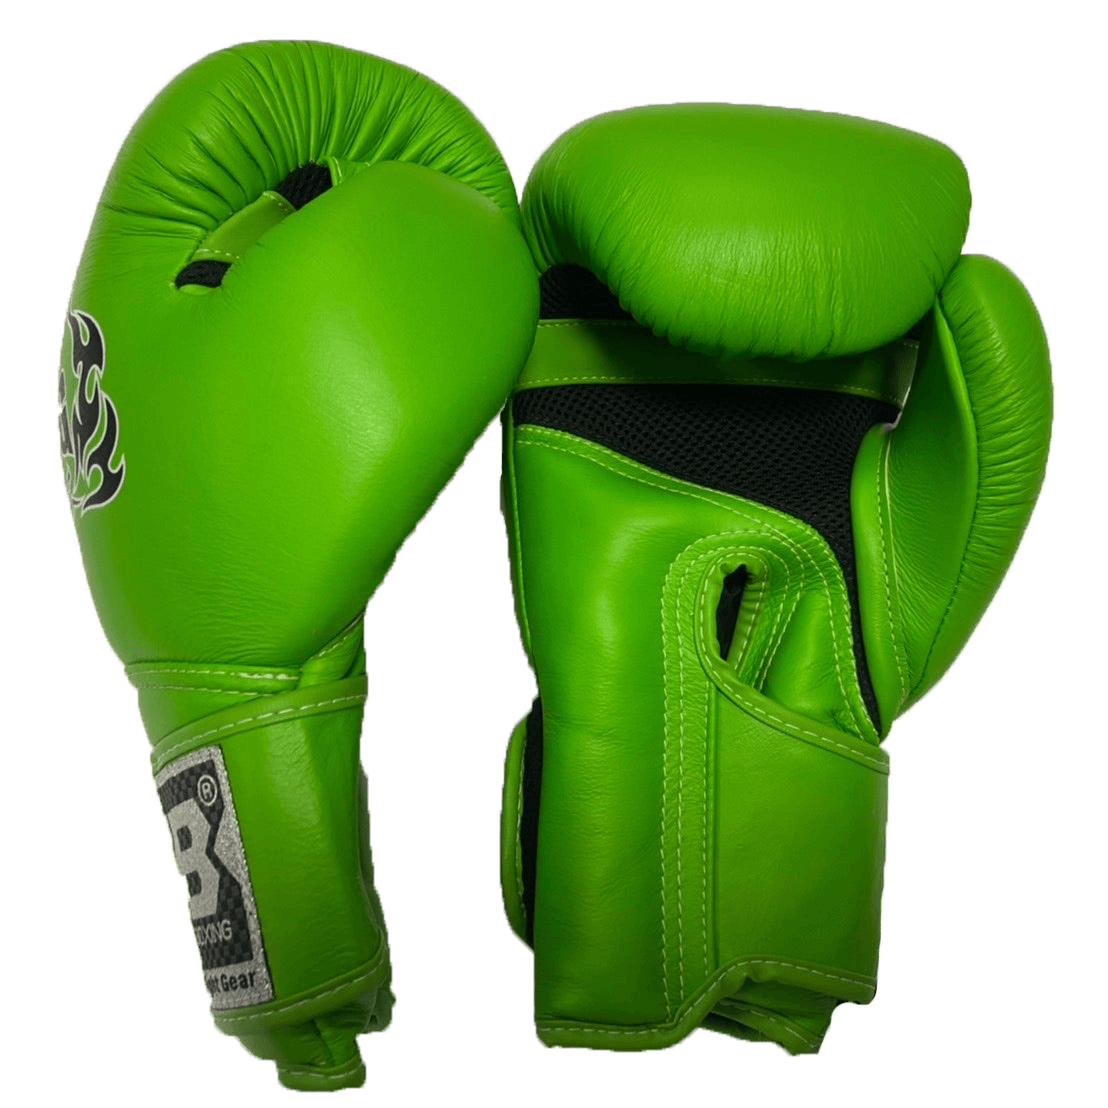 Top King Boxing Gloves "Super" TKBGSA Green